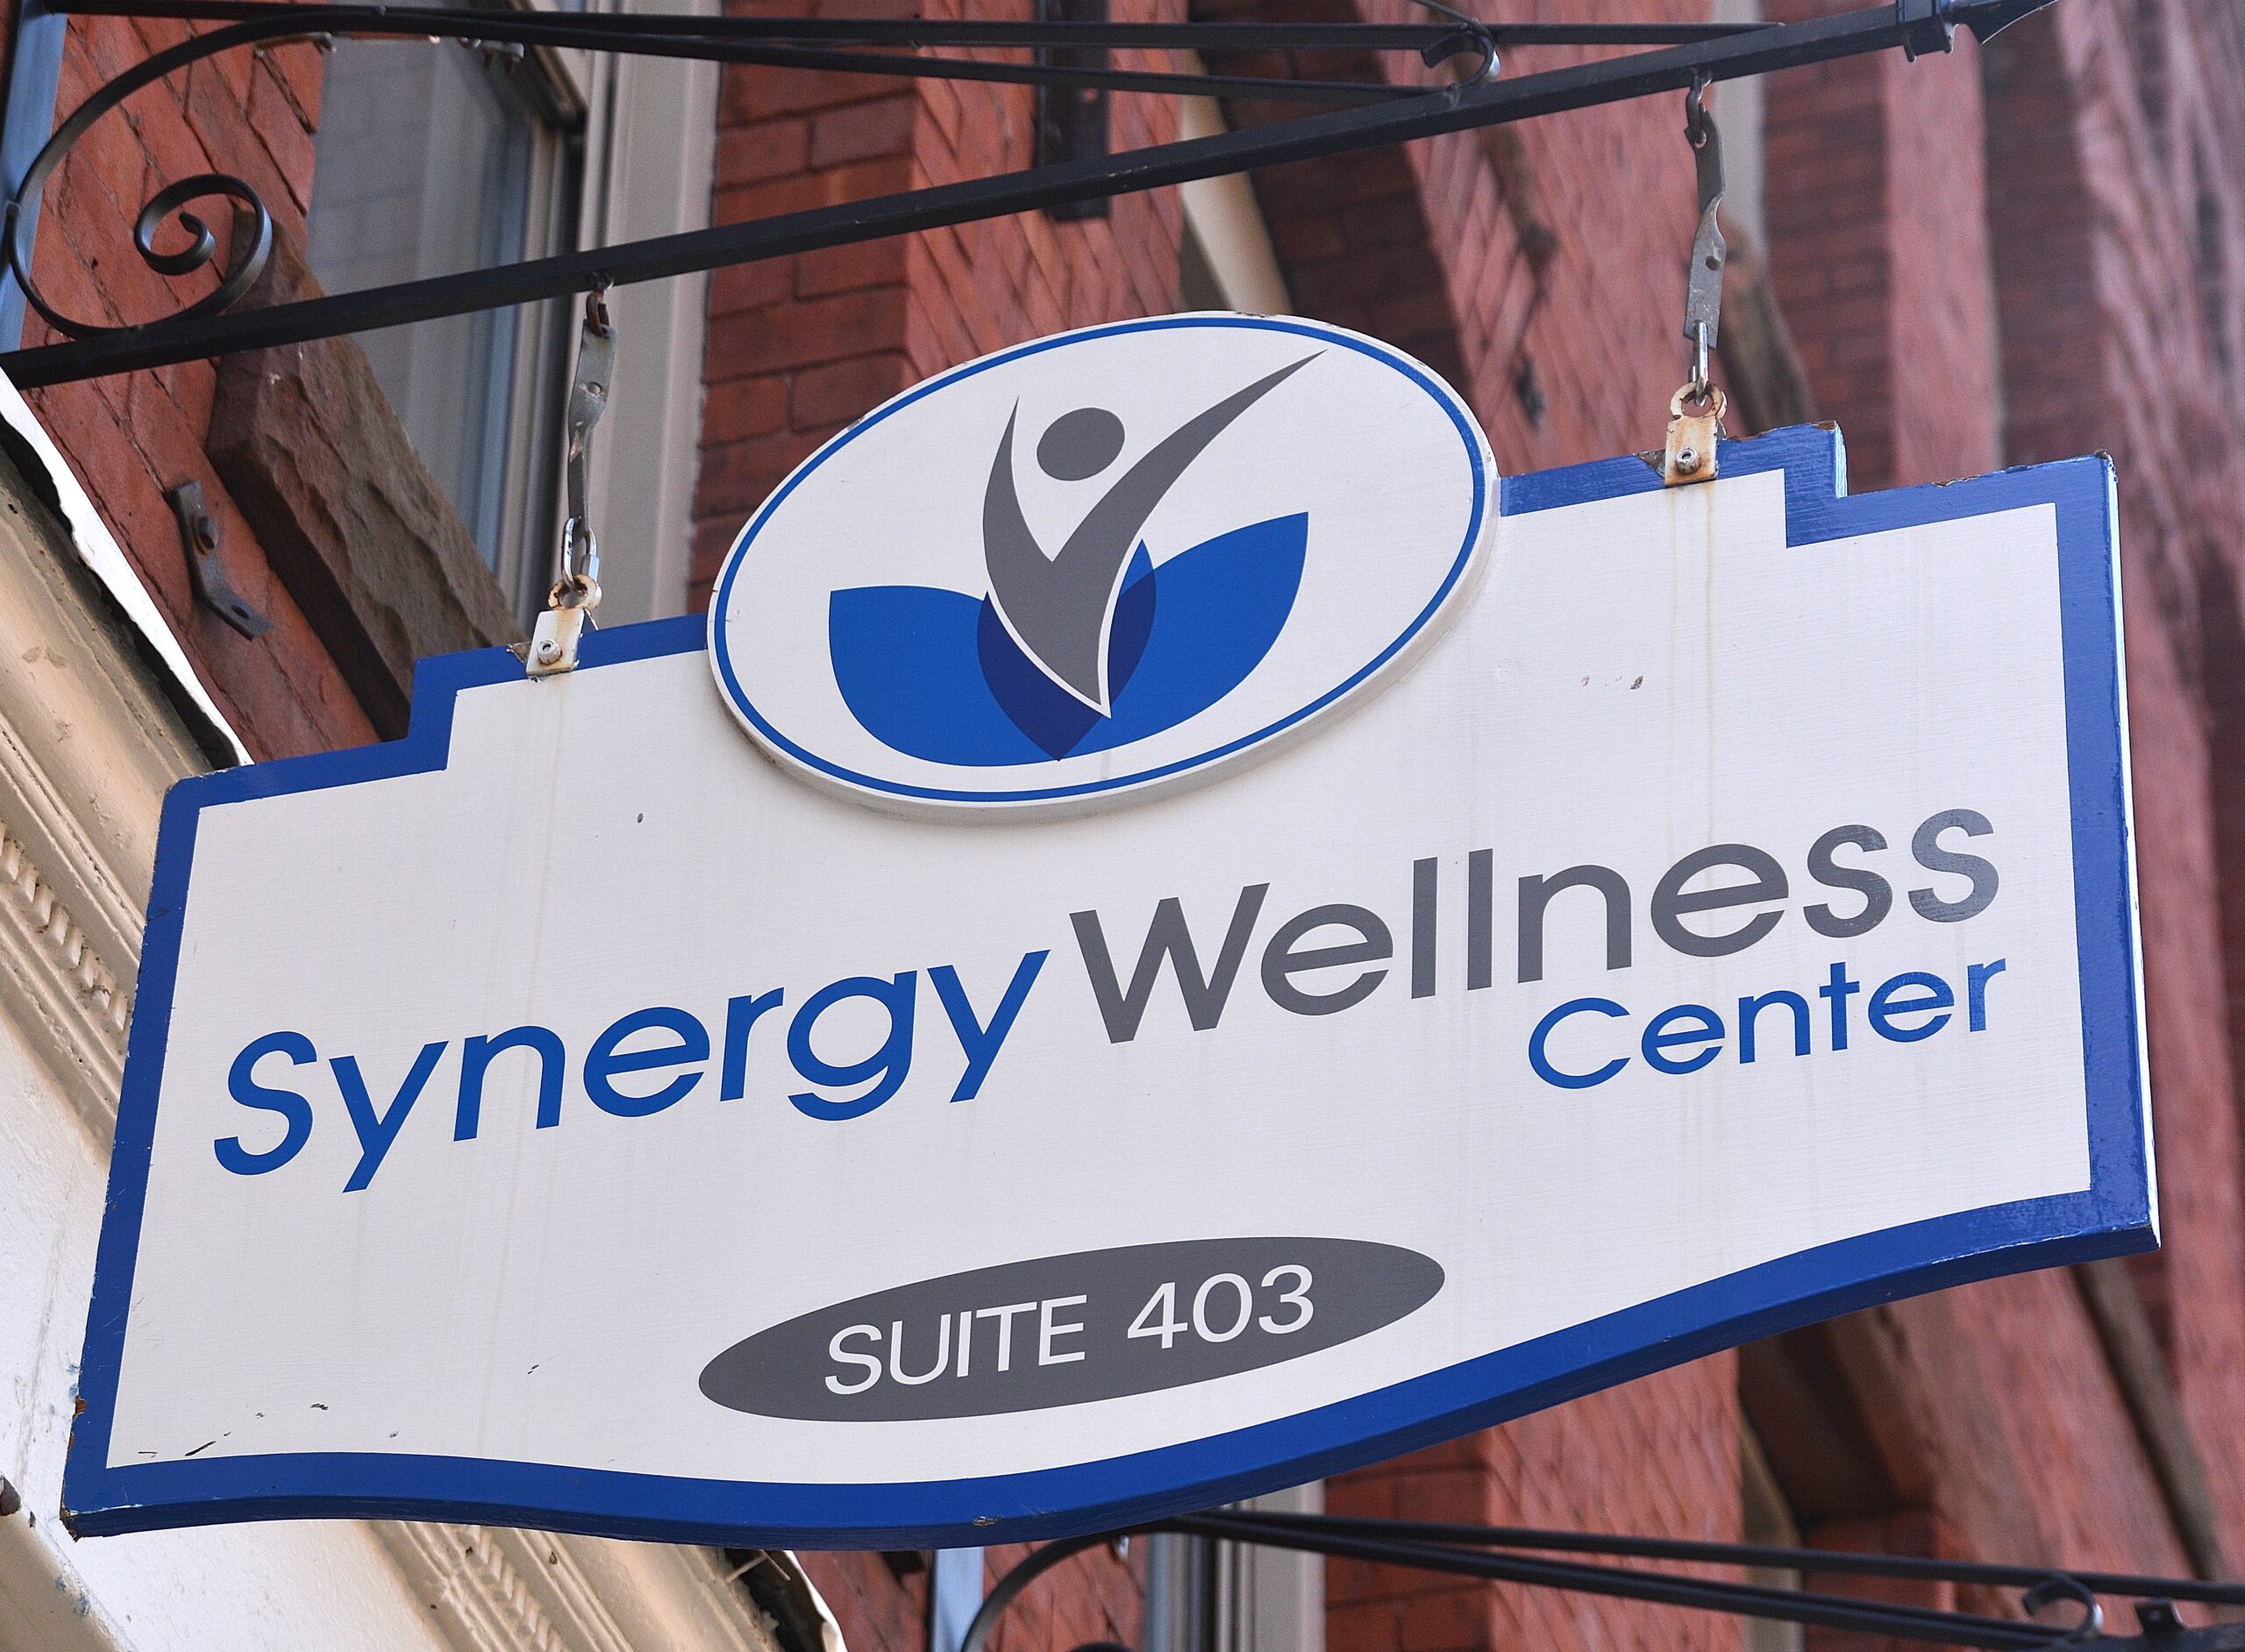 Synergy Wellness Center sign by Paul Tucker